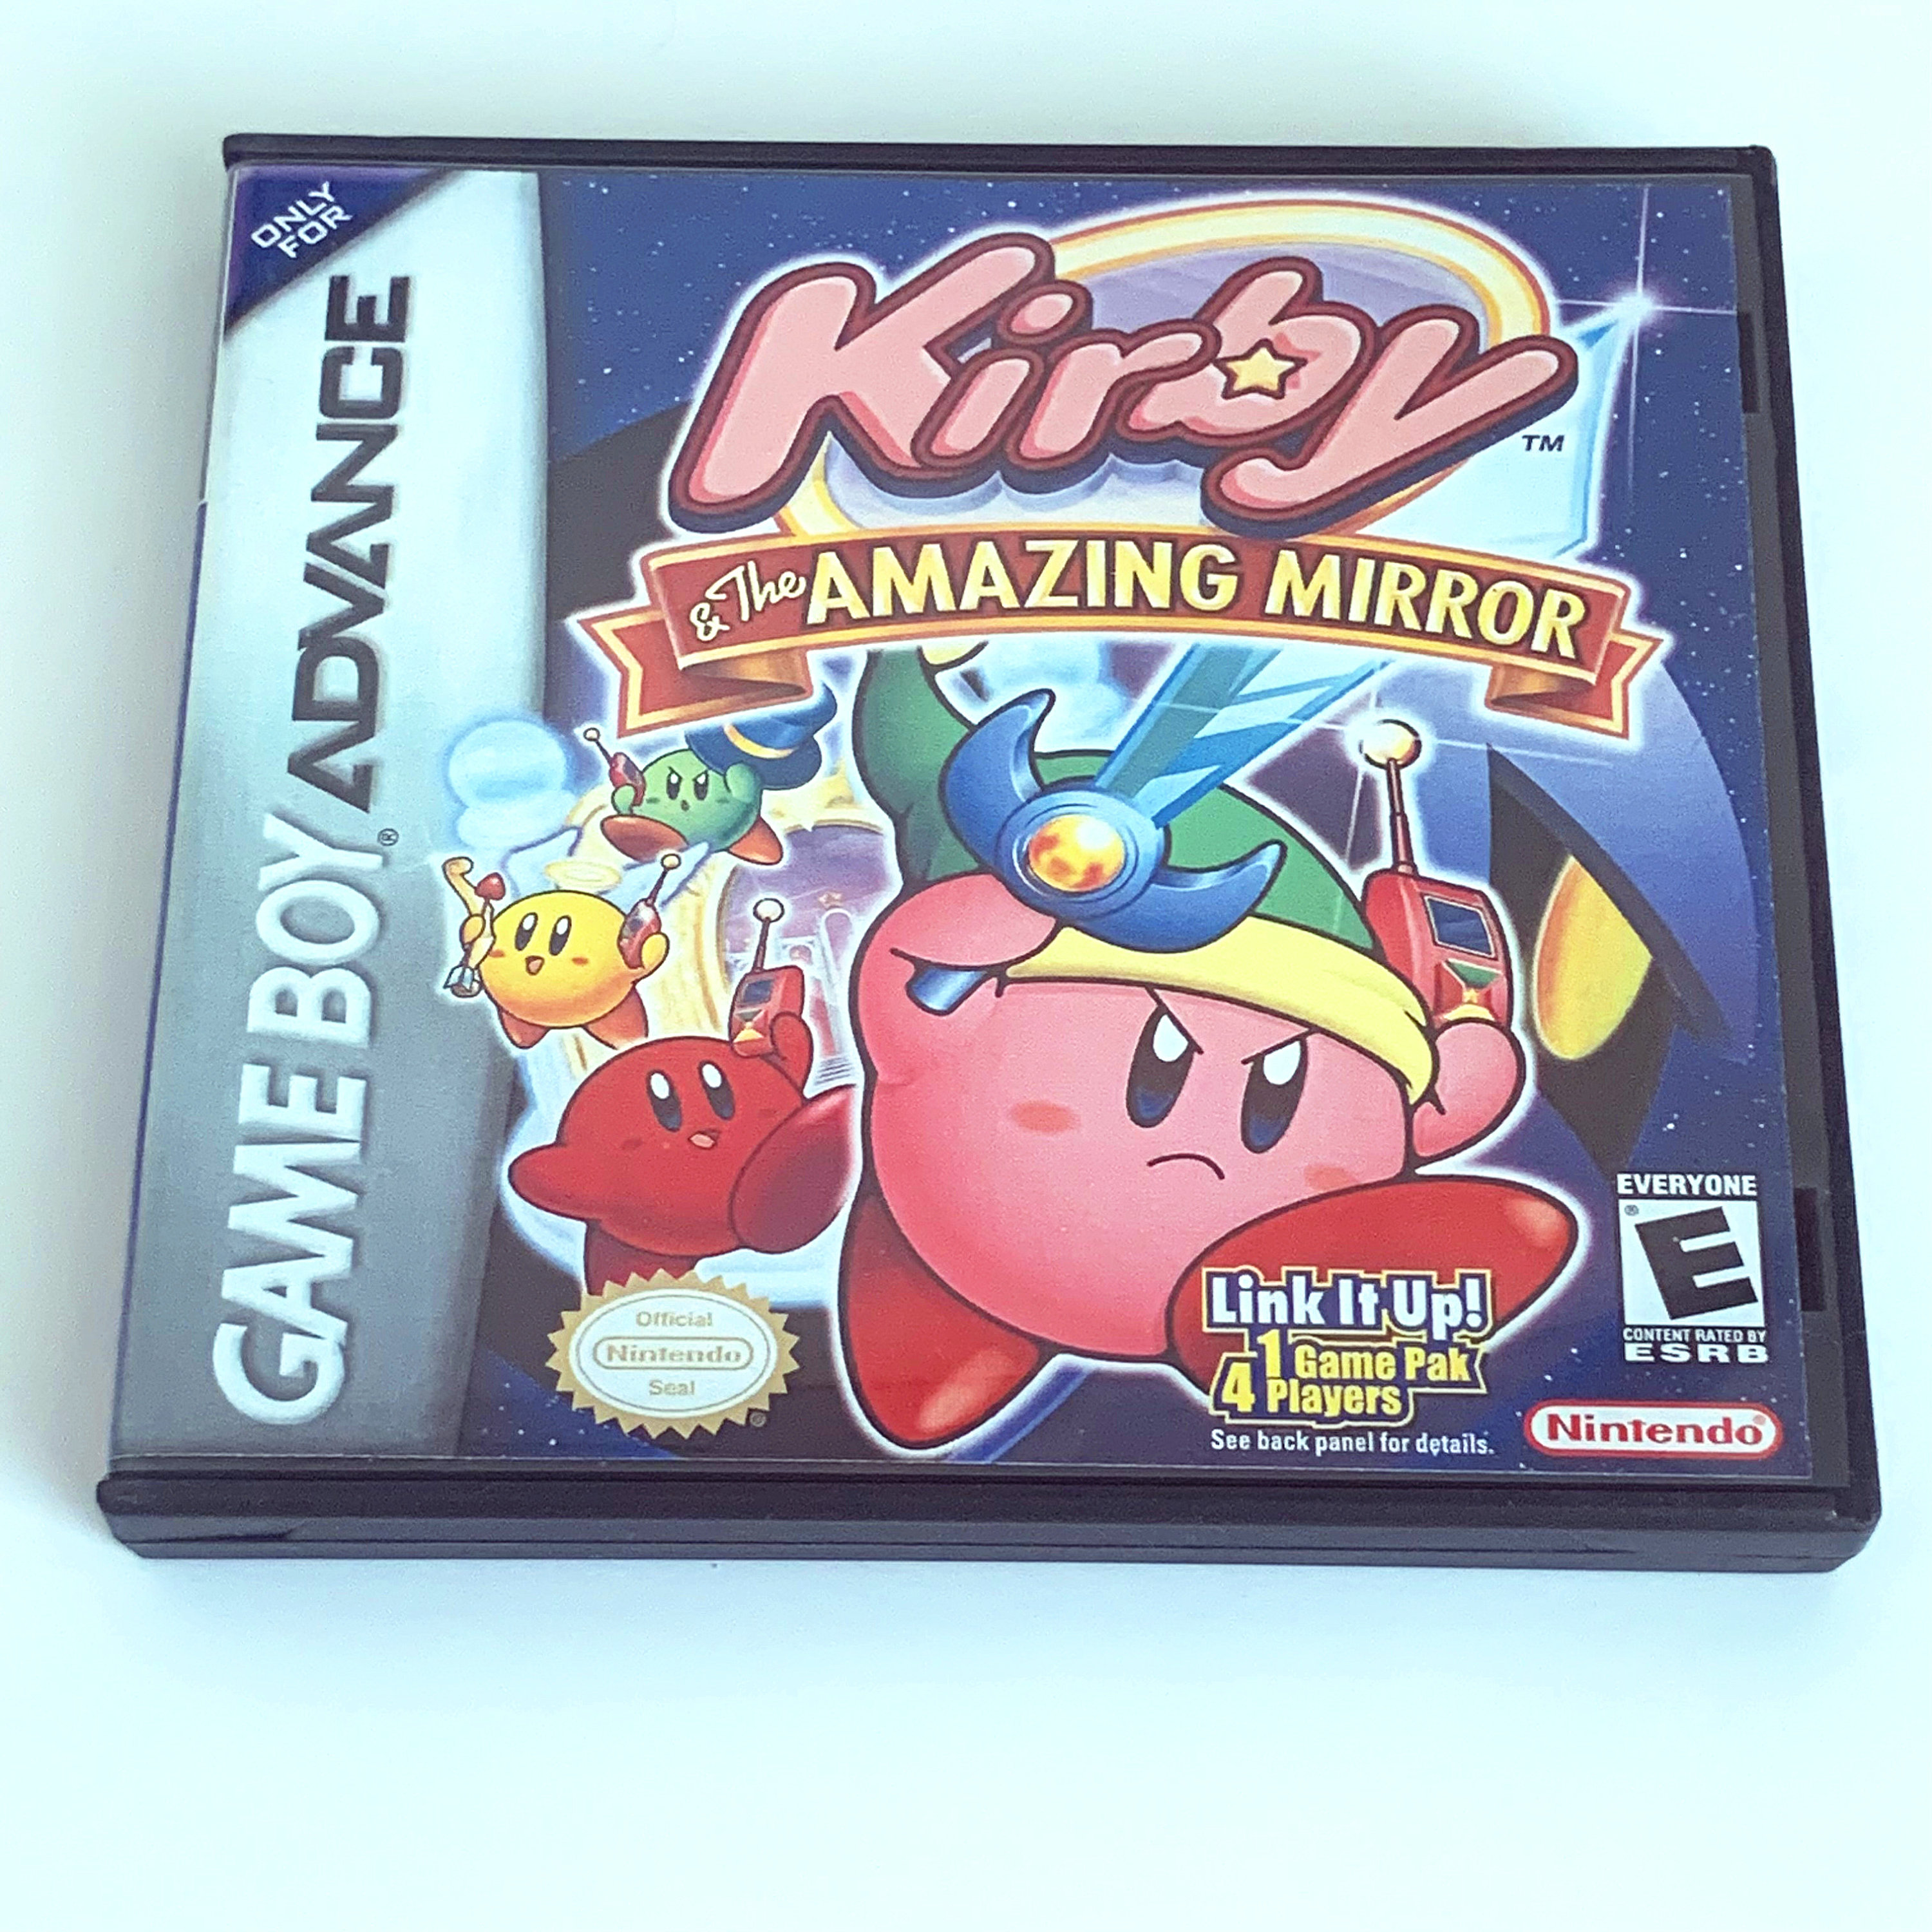 Kirby The Amazing Mirror 2004 Game Boy Advance Box Cover Art - Reverasite